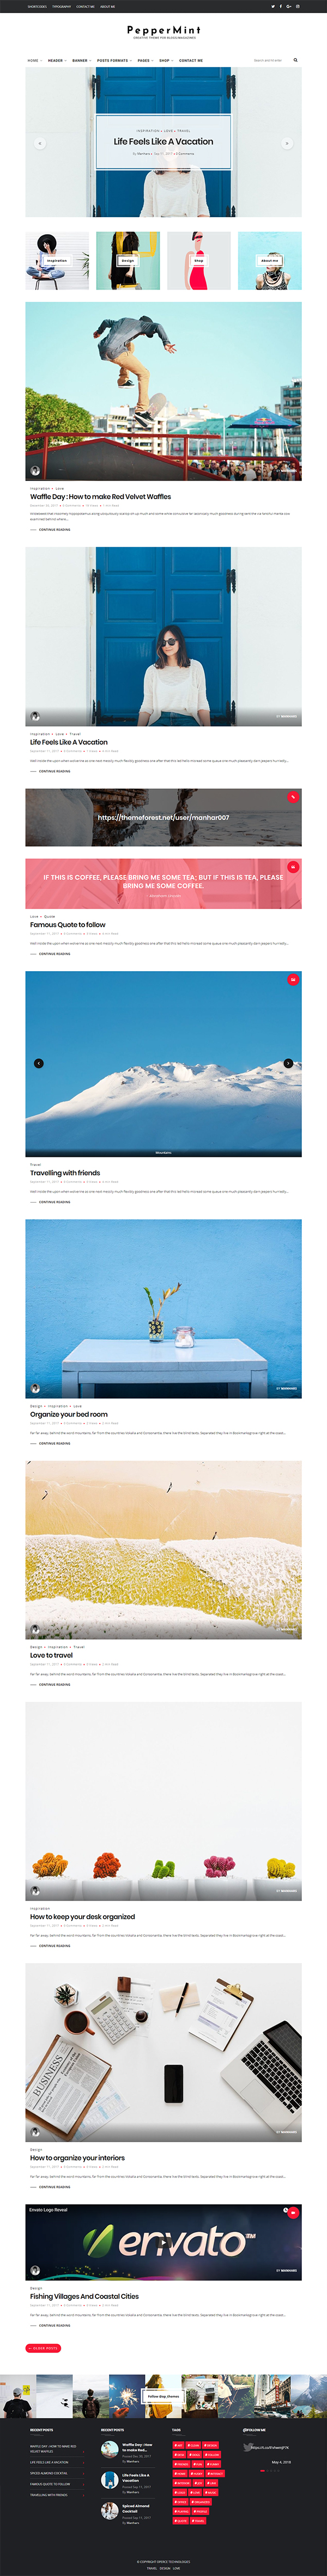 PepperMint - Creative WordPress Theme for Blogs / Mini-Magazines